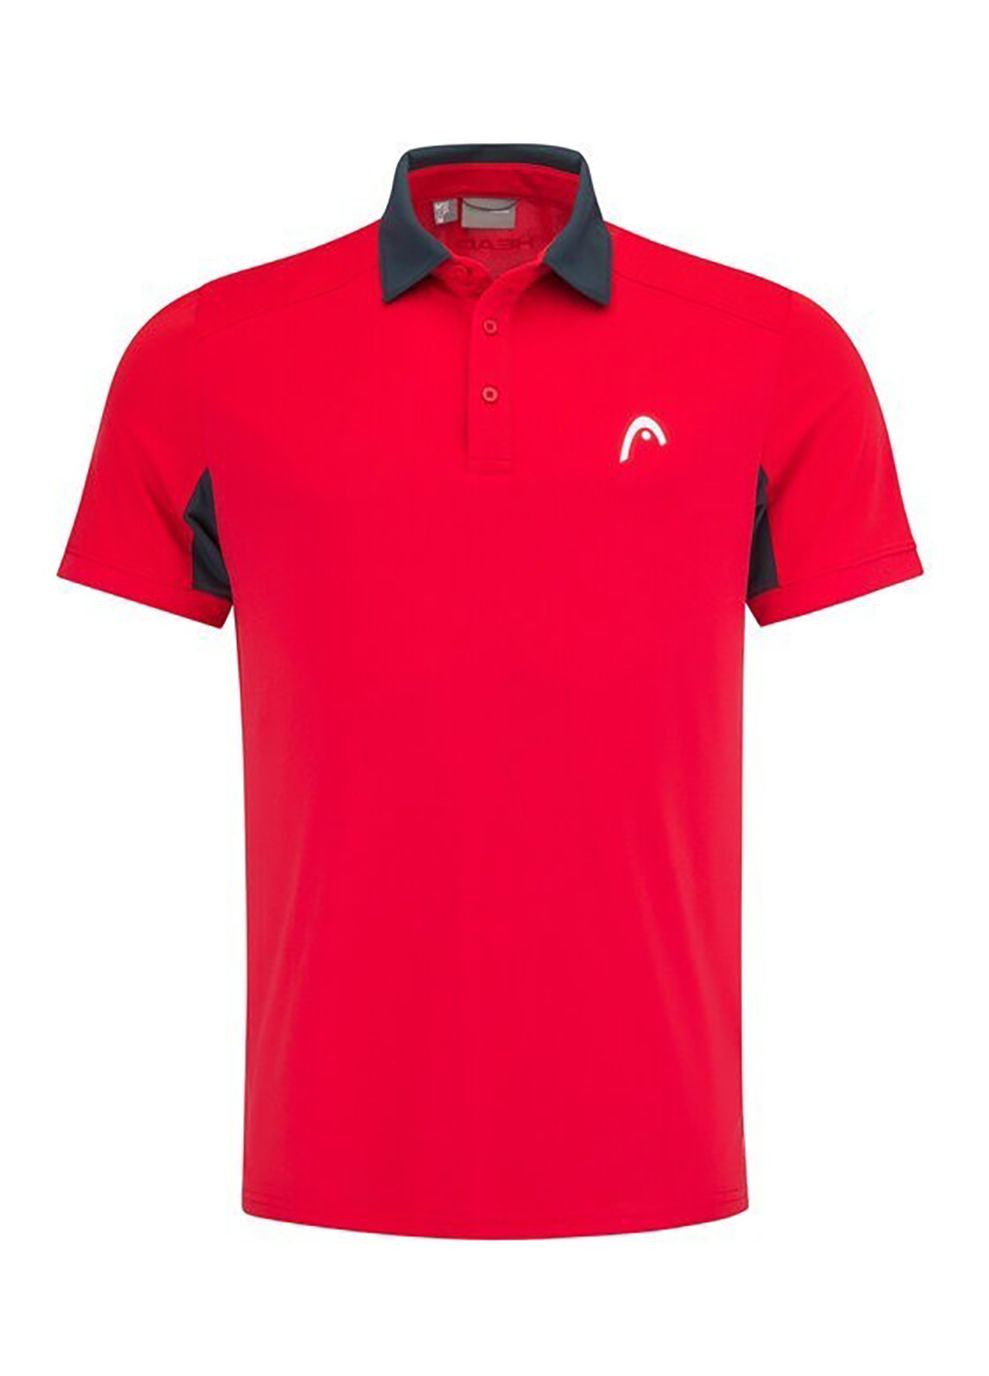 Красная футболка-мужское поло slice polo shirt men fa для мужчин Head